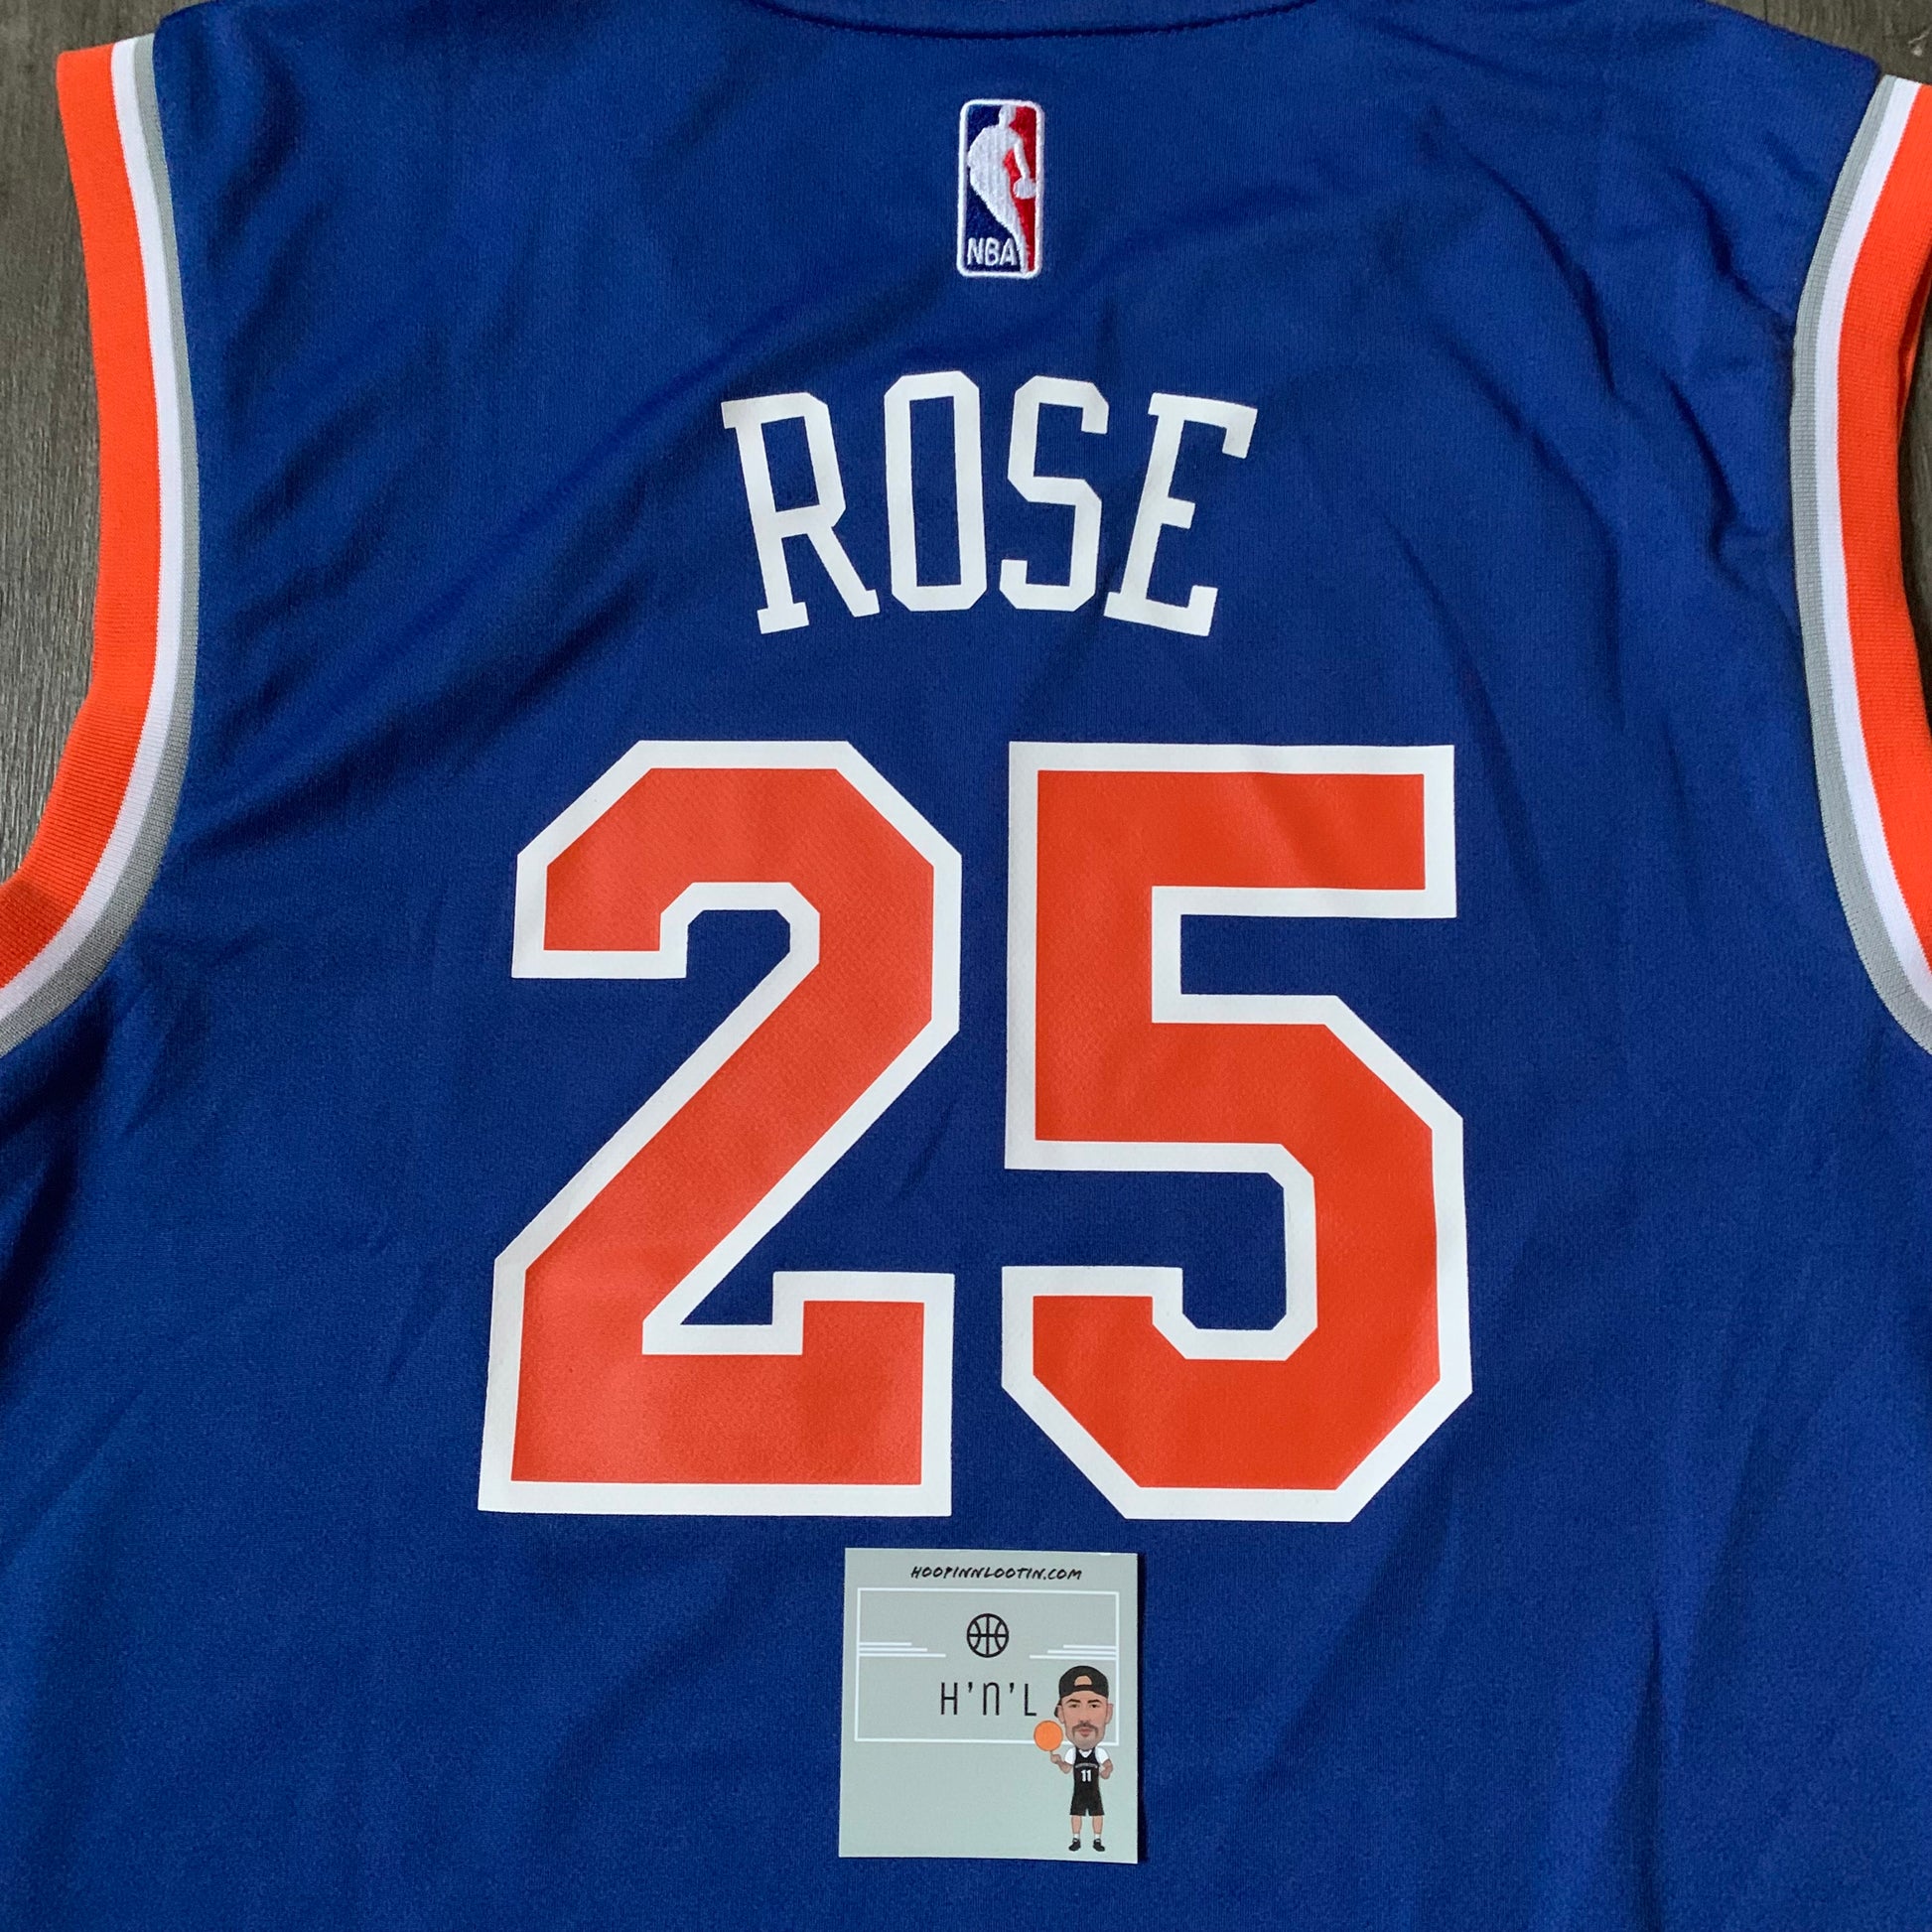 Derrick Rose New York Knicks adidas climacool Road Swingman Jersey - Royal